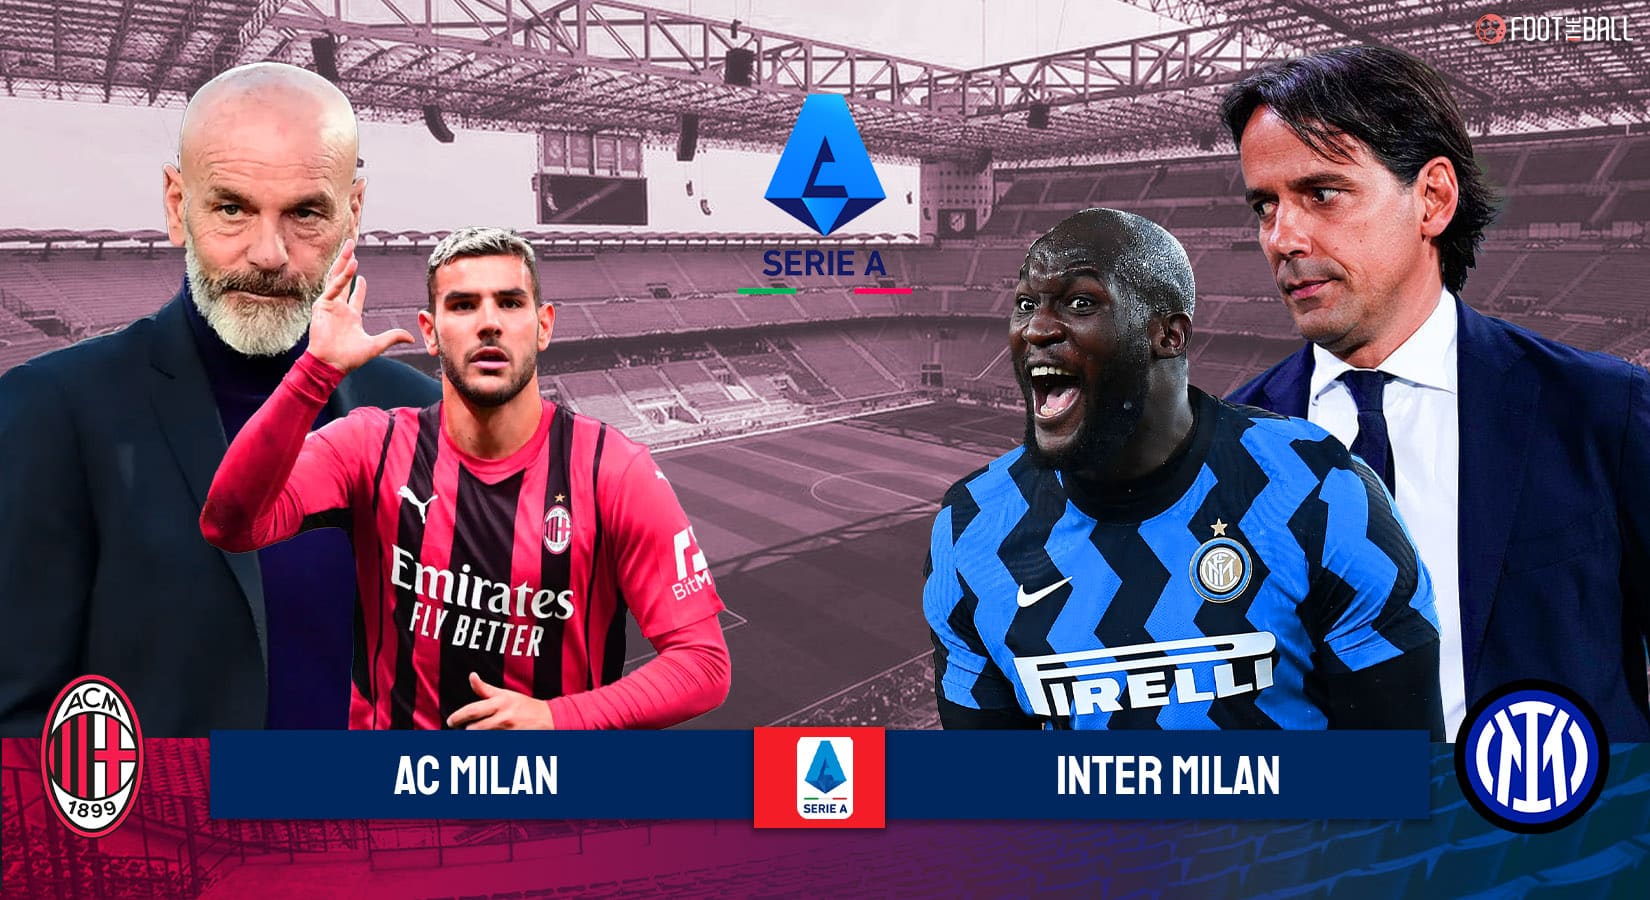 At regere hav det sjovt kutter Preview: AC Milan Vs Inter Milan - Predictions, Lineups & More